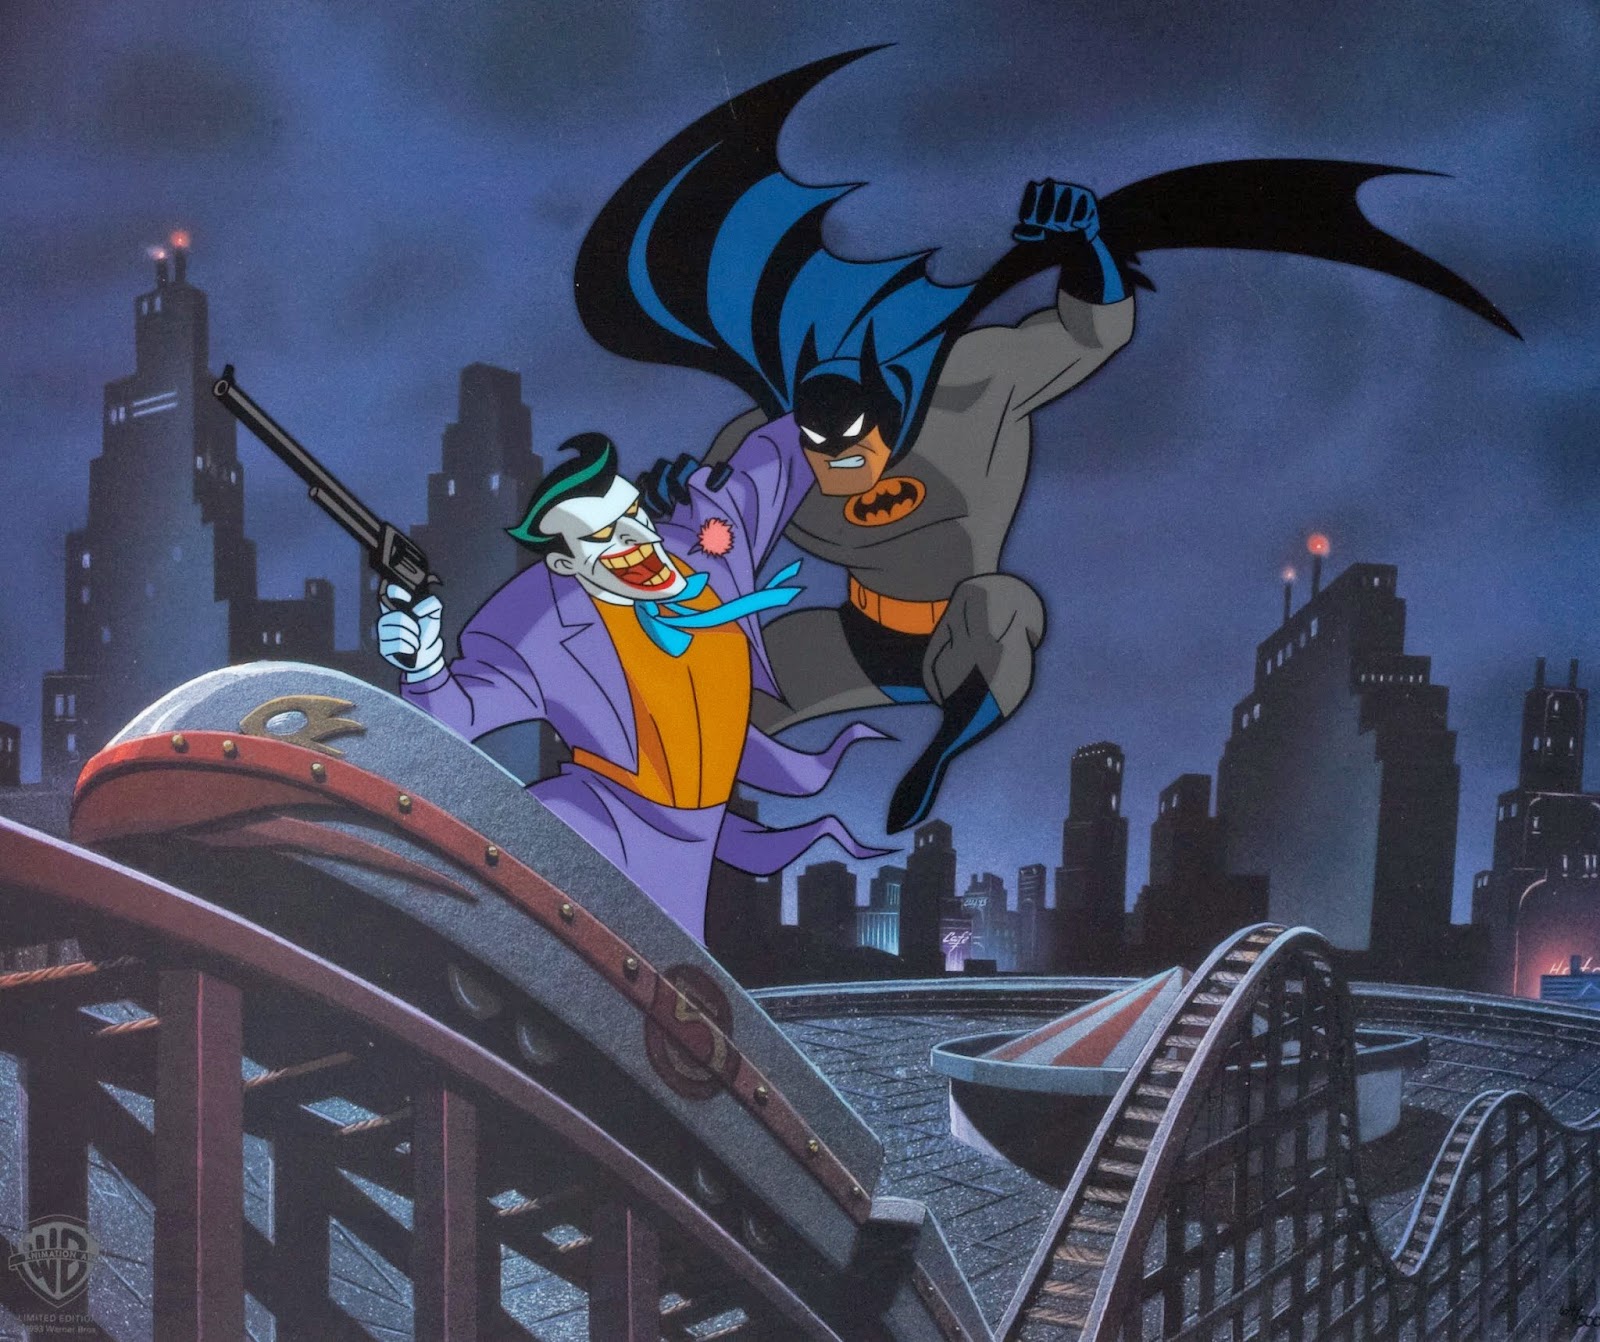 Batman and The Joker (voiced by Mark Hamill) battle in Batman Mask of the Phantasm (1993)